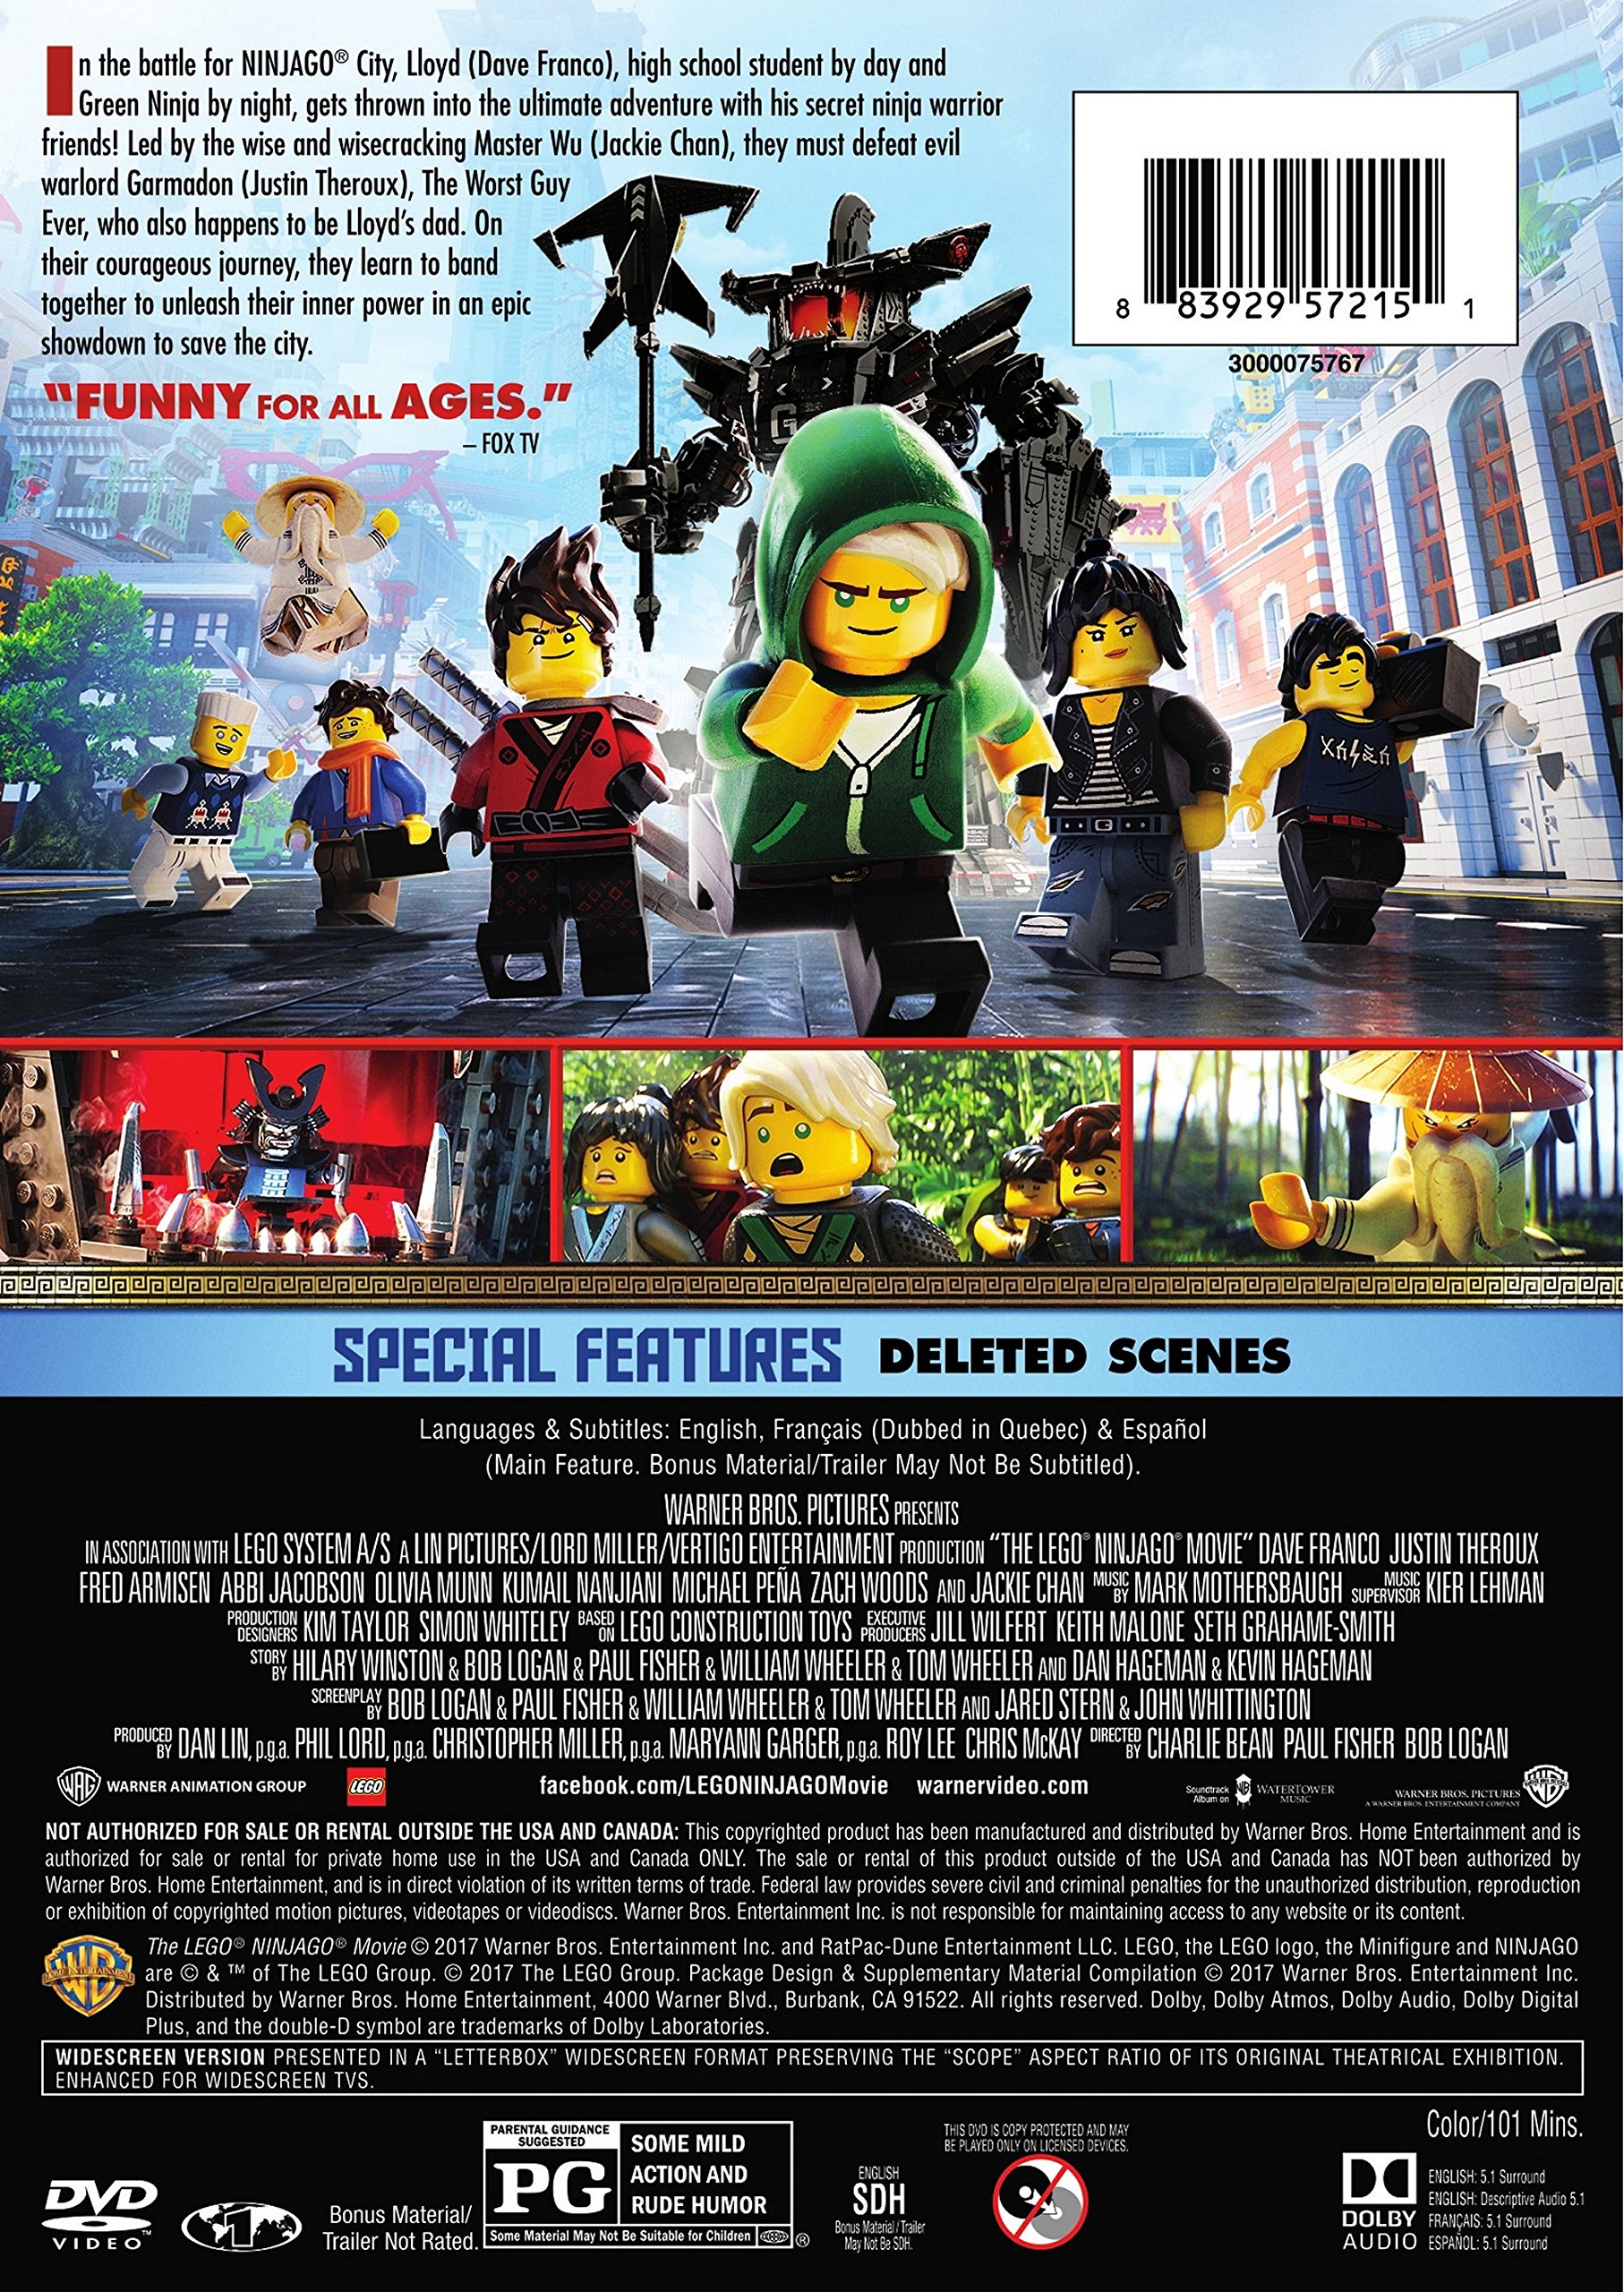 The Lego Ninjago Movie (DVD), Warner Home Video, Kids & Family - image 5 of 5